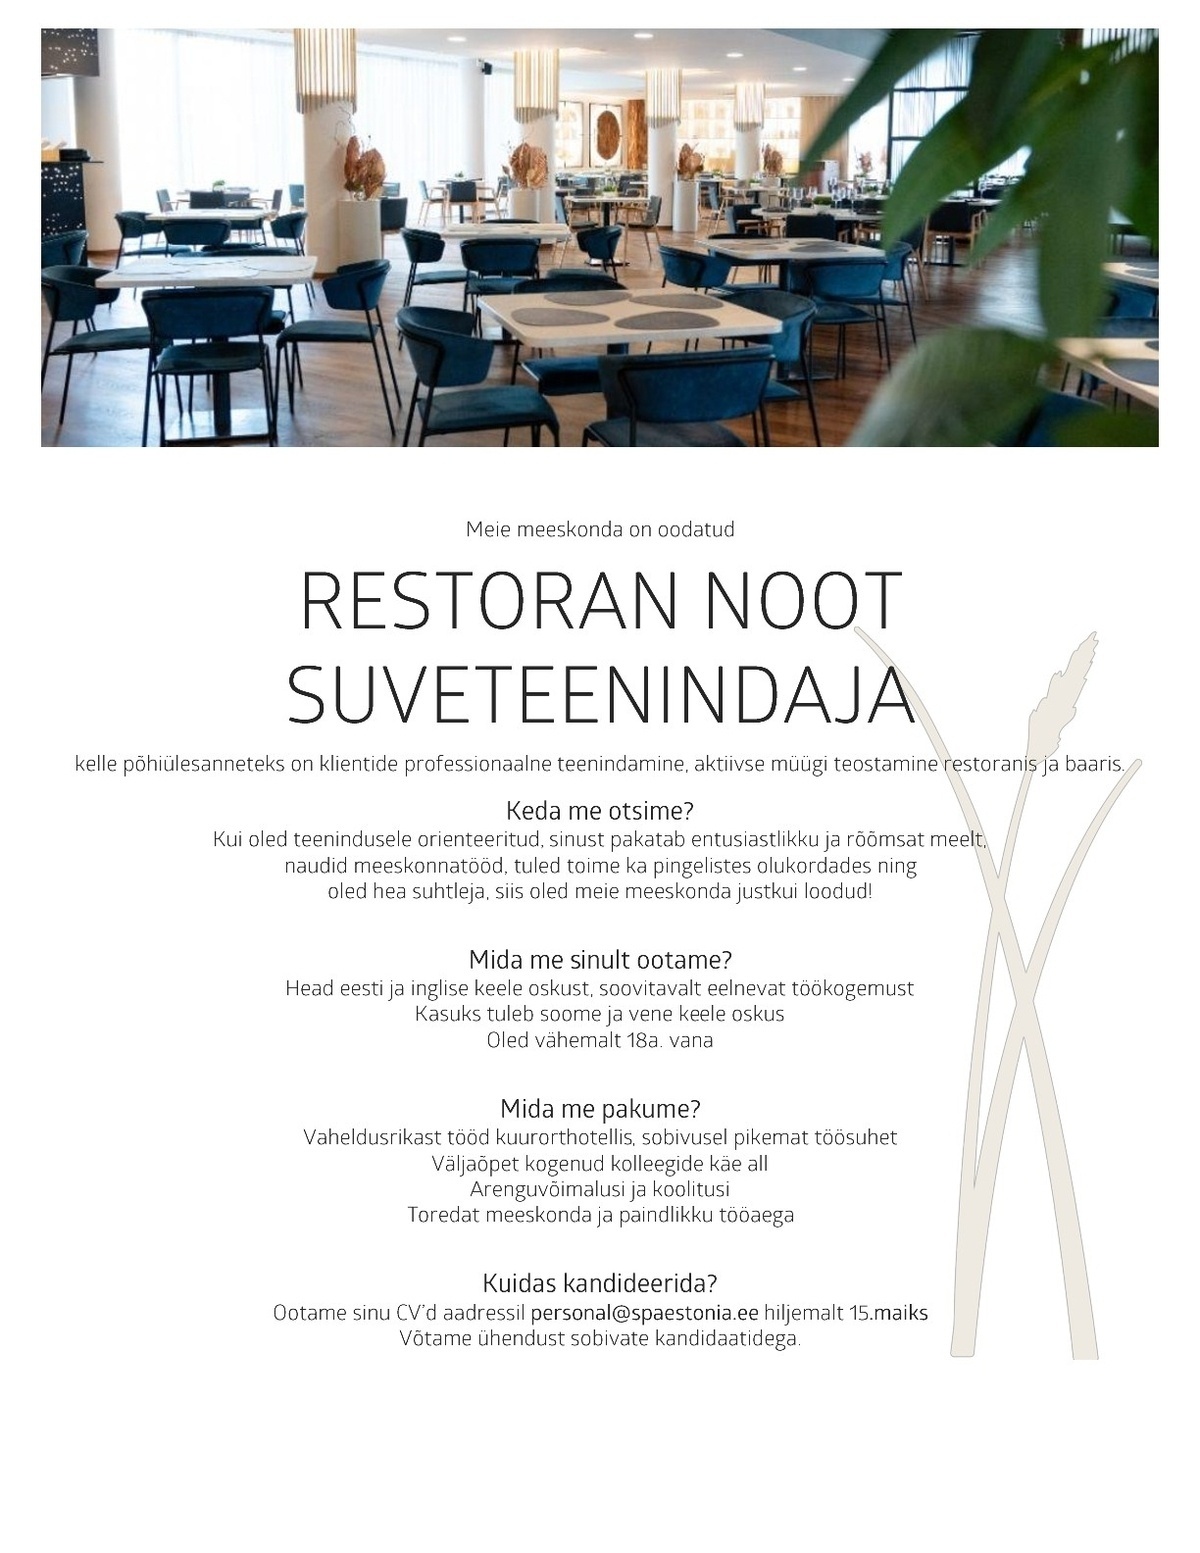 Estonia Spa Hotels AS Suvine klienditeenindaja restoranis NOOT Estonia Spa Hotels´is